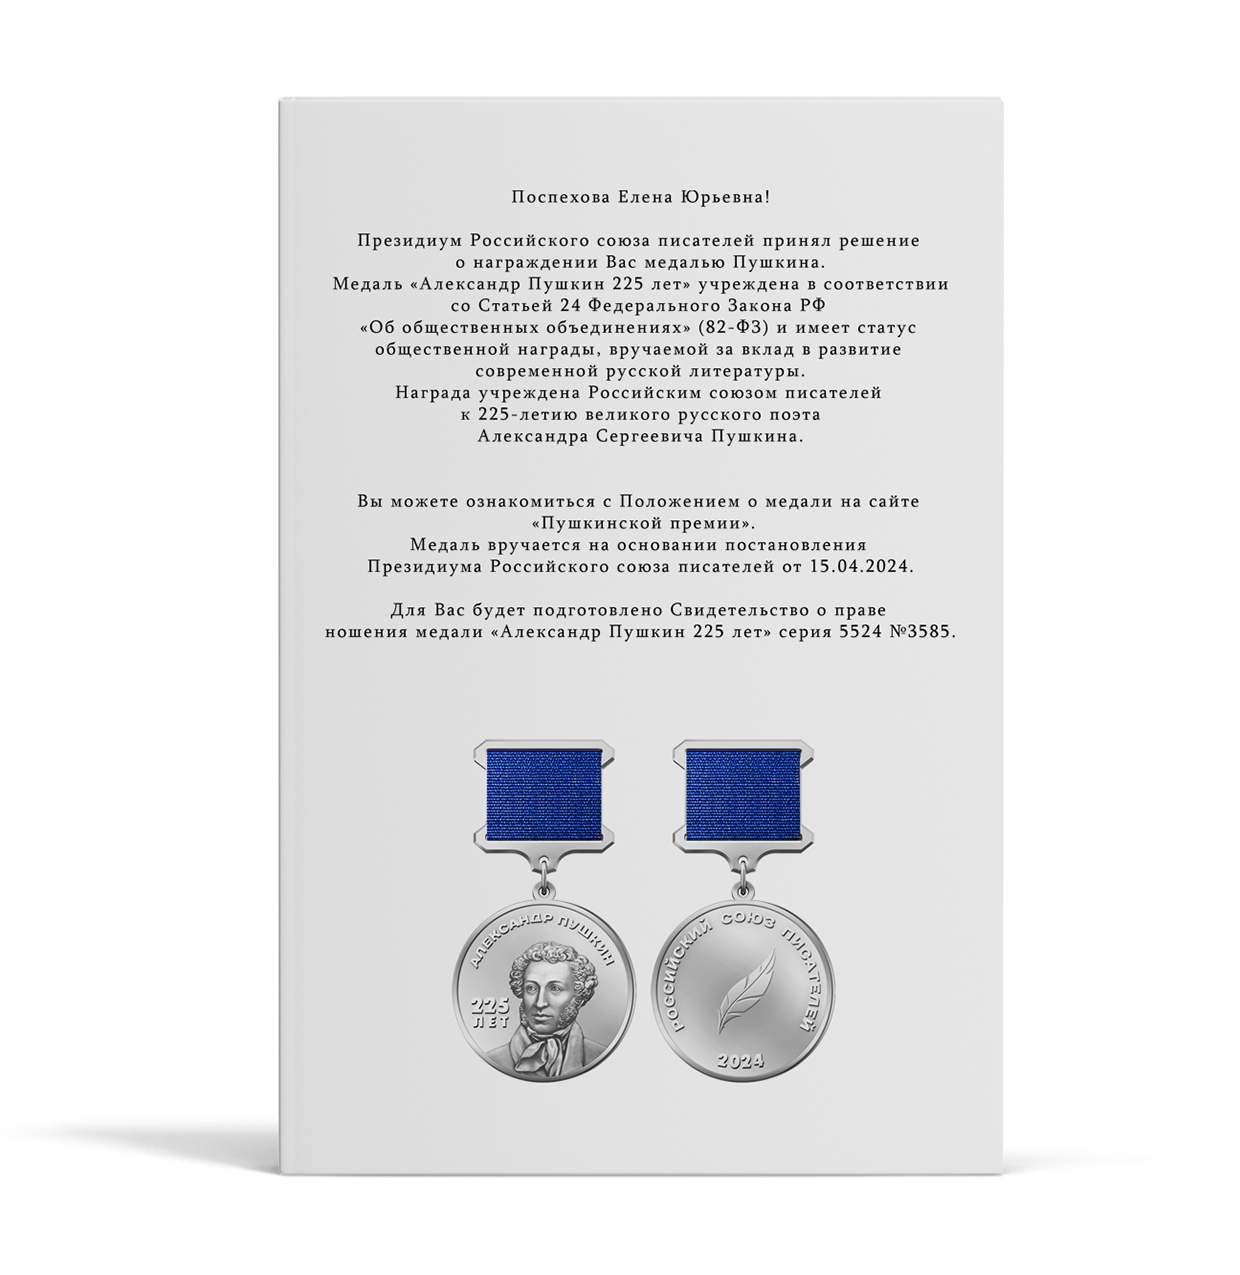 POSPEKHOVA ELENA POET OF THE YEAR Pushkin Medal